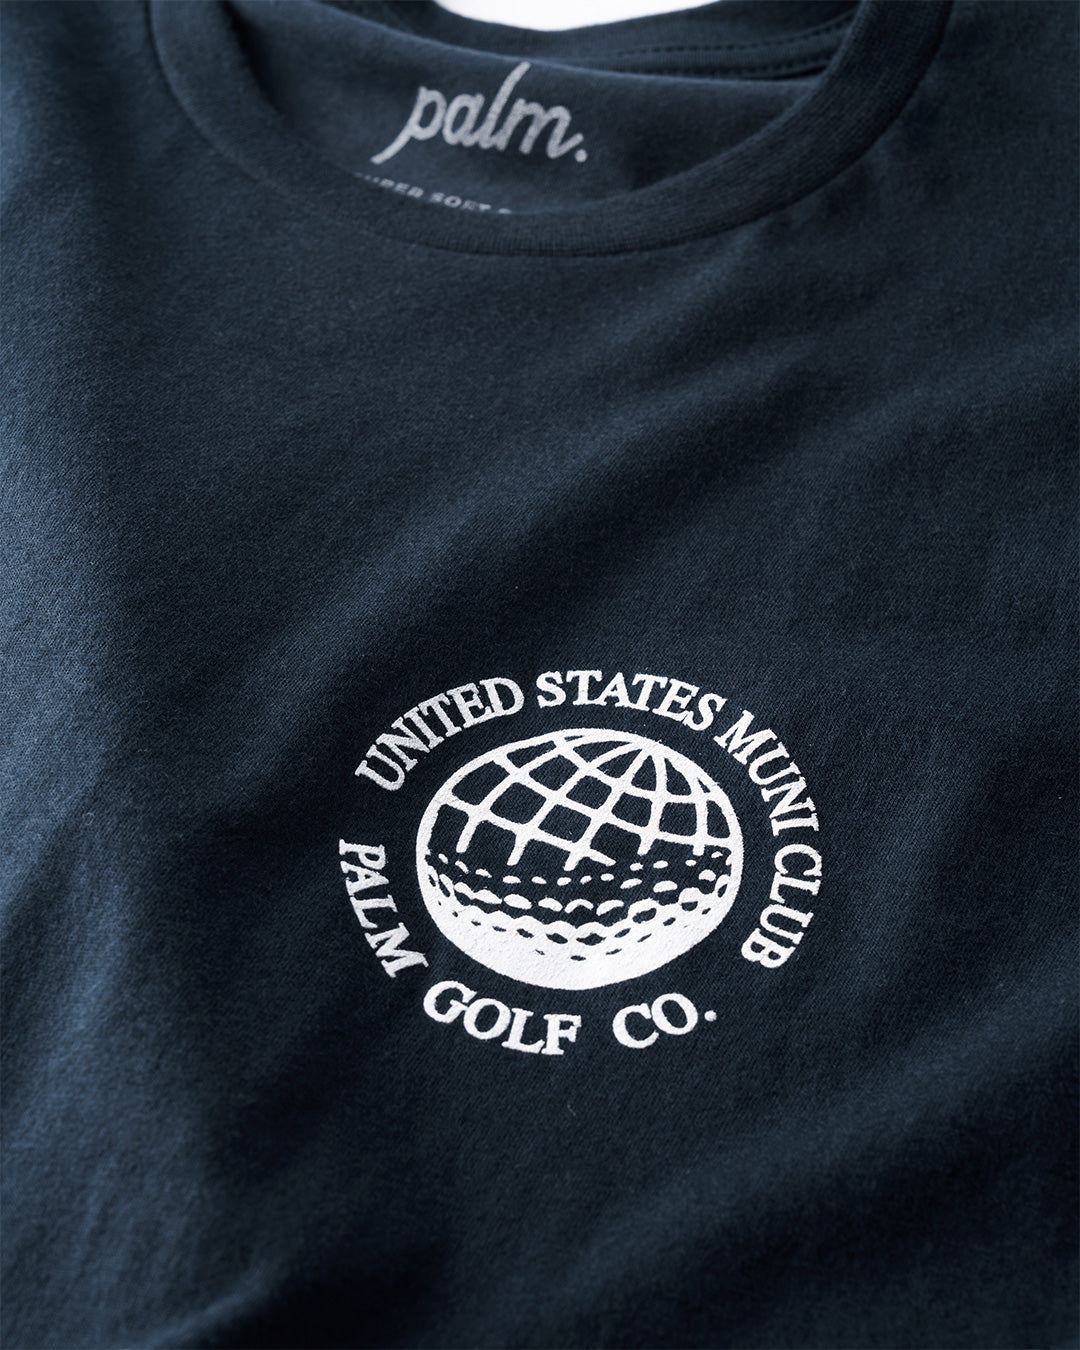 Palm Golf Co. Muni Club T-Shirt